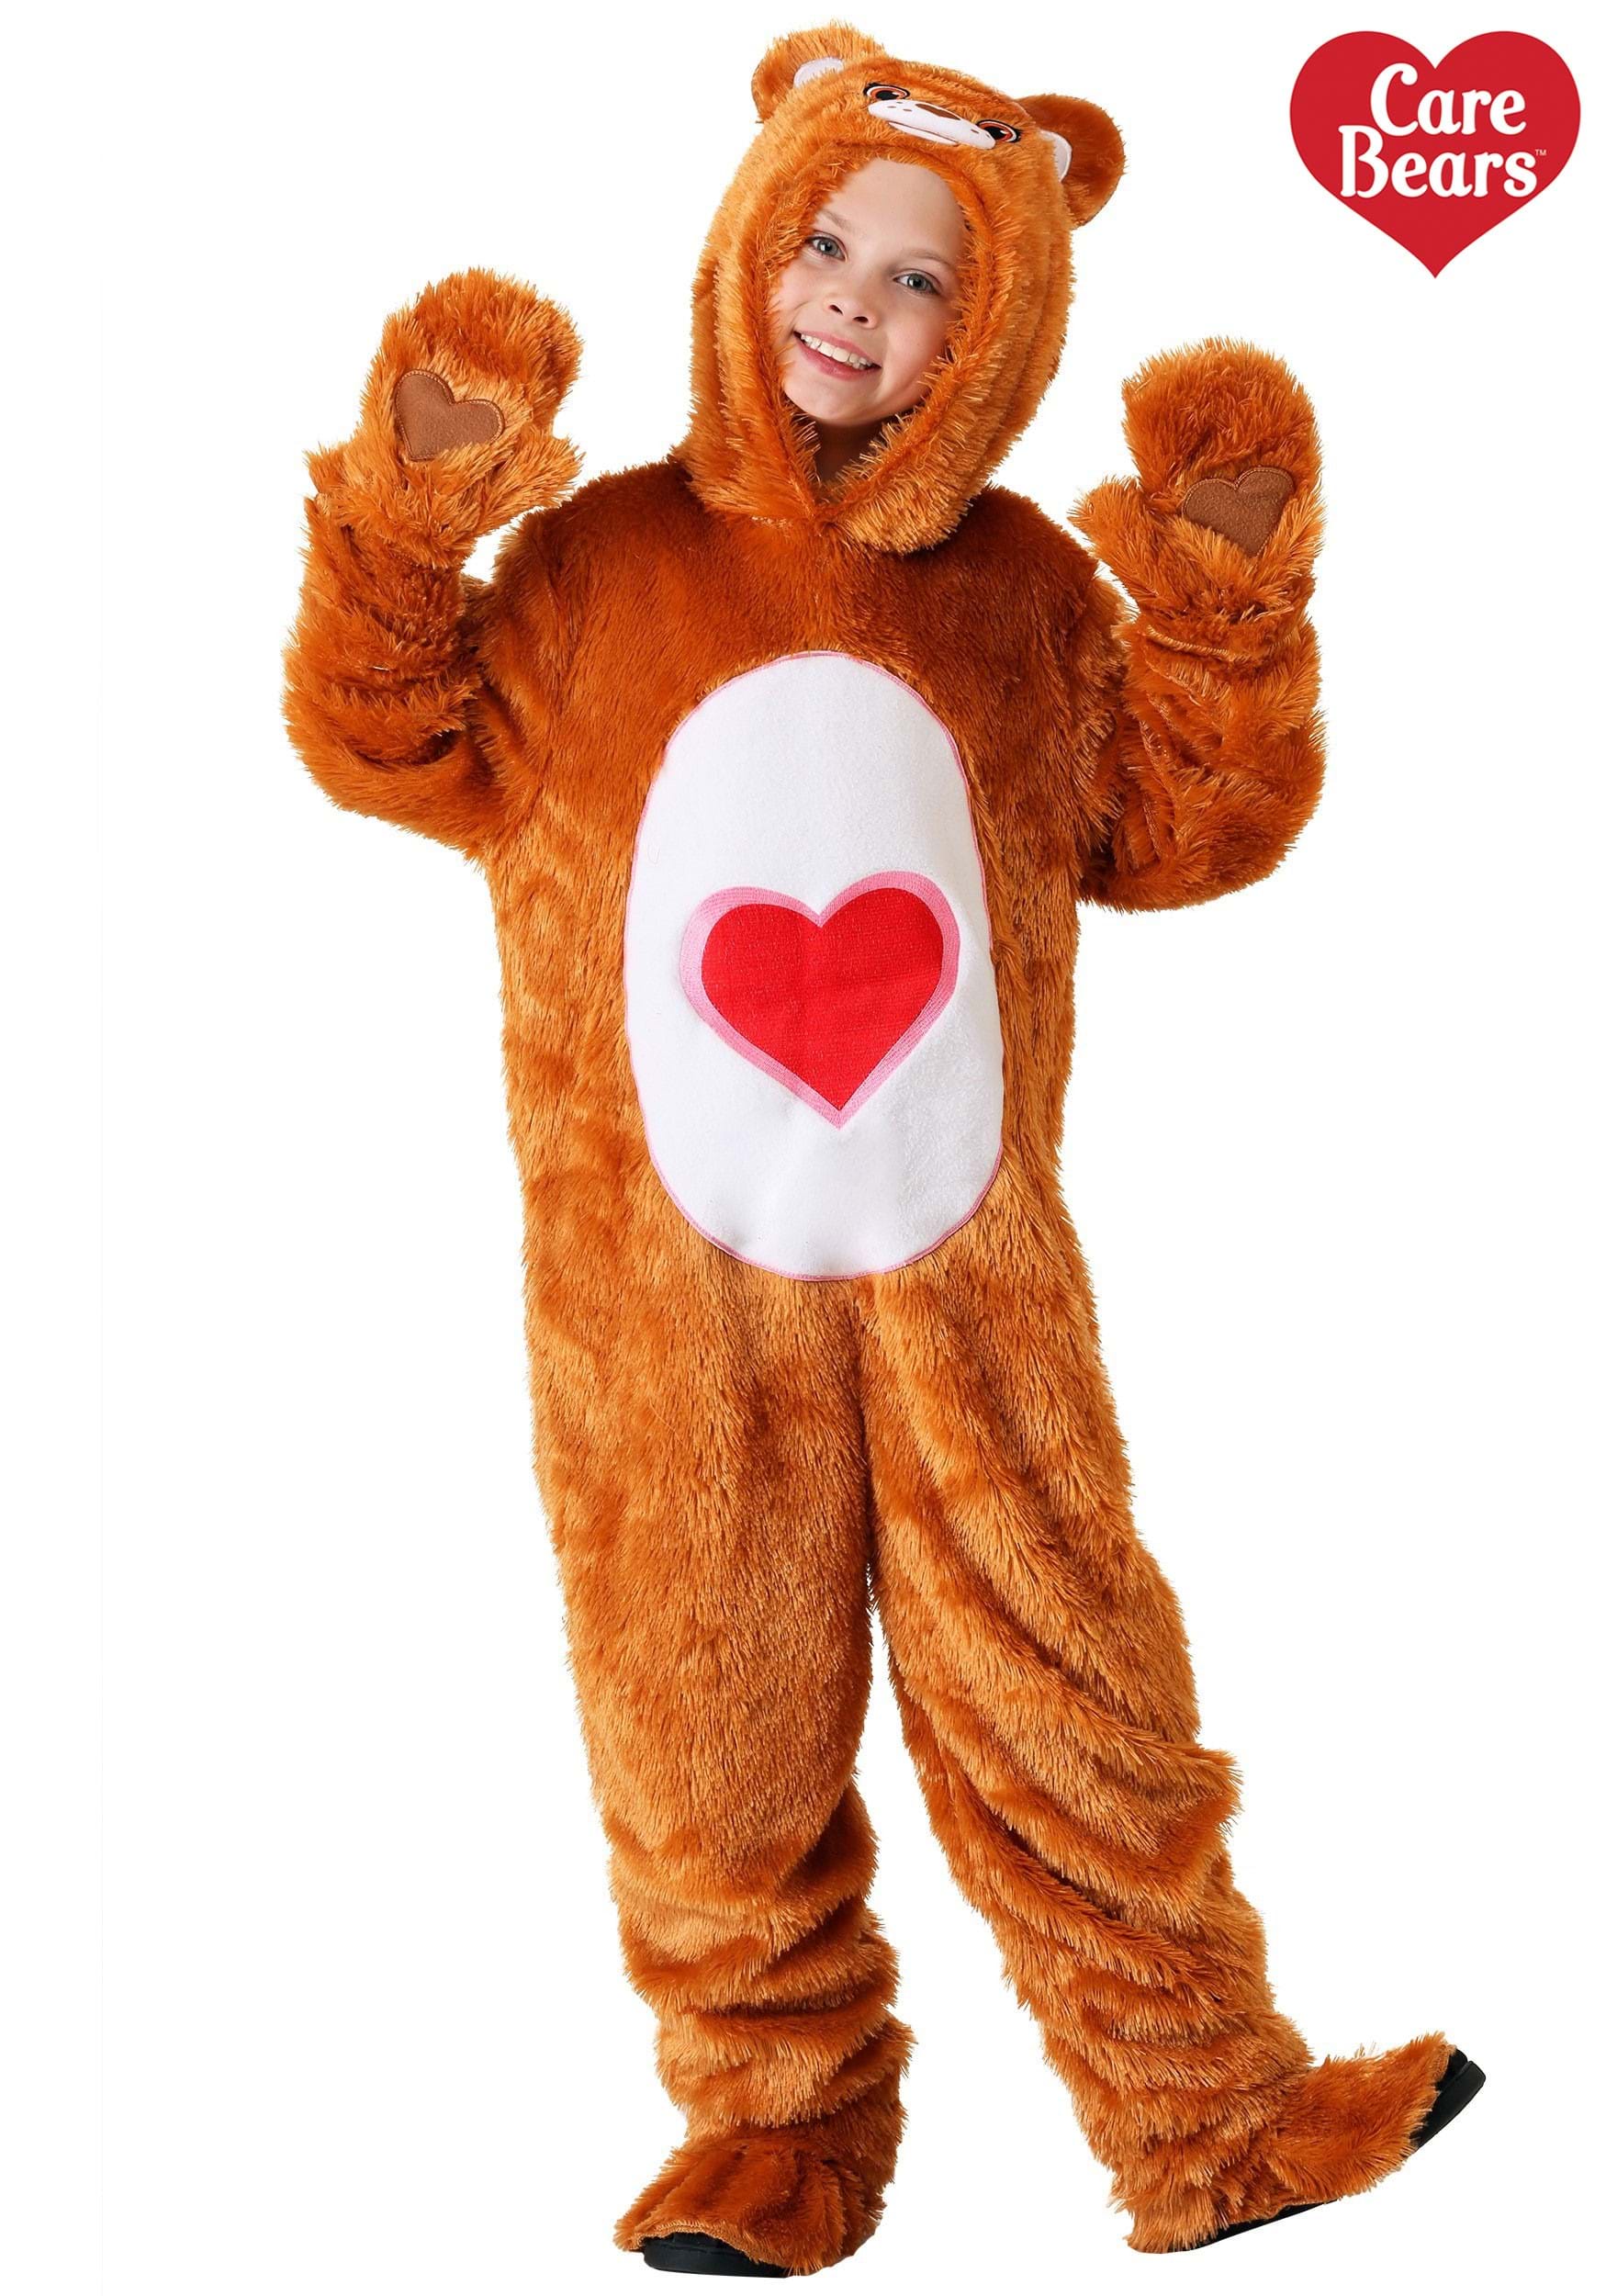 plush teddy bear costume